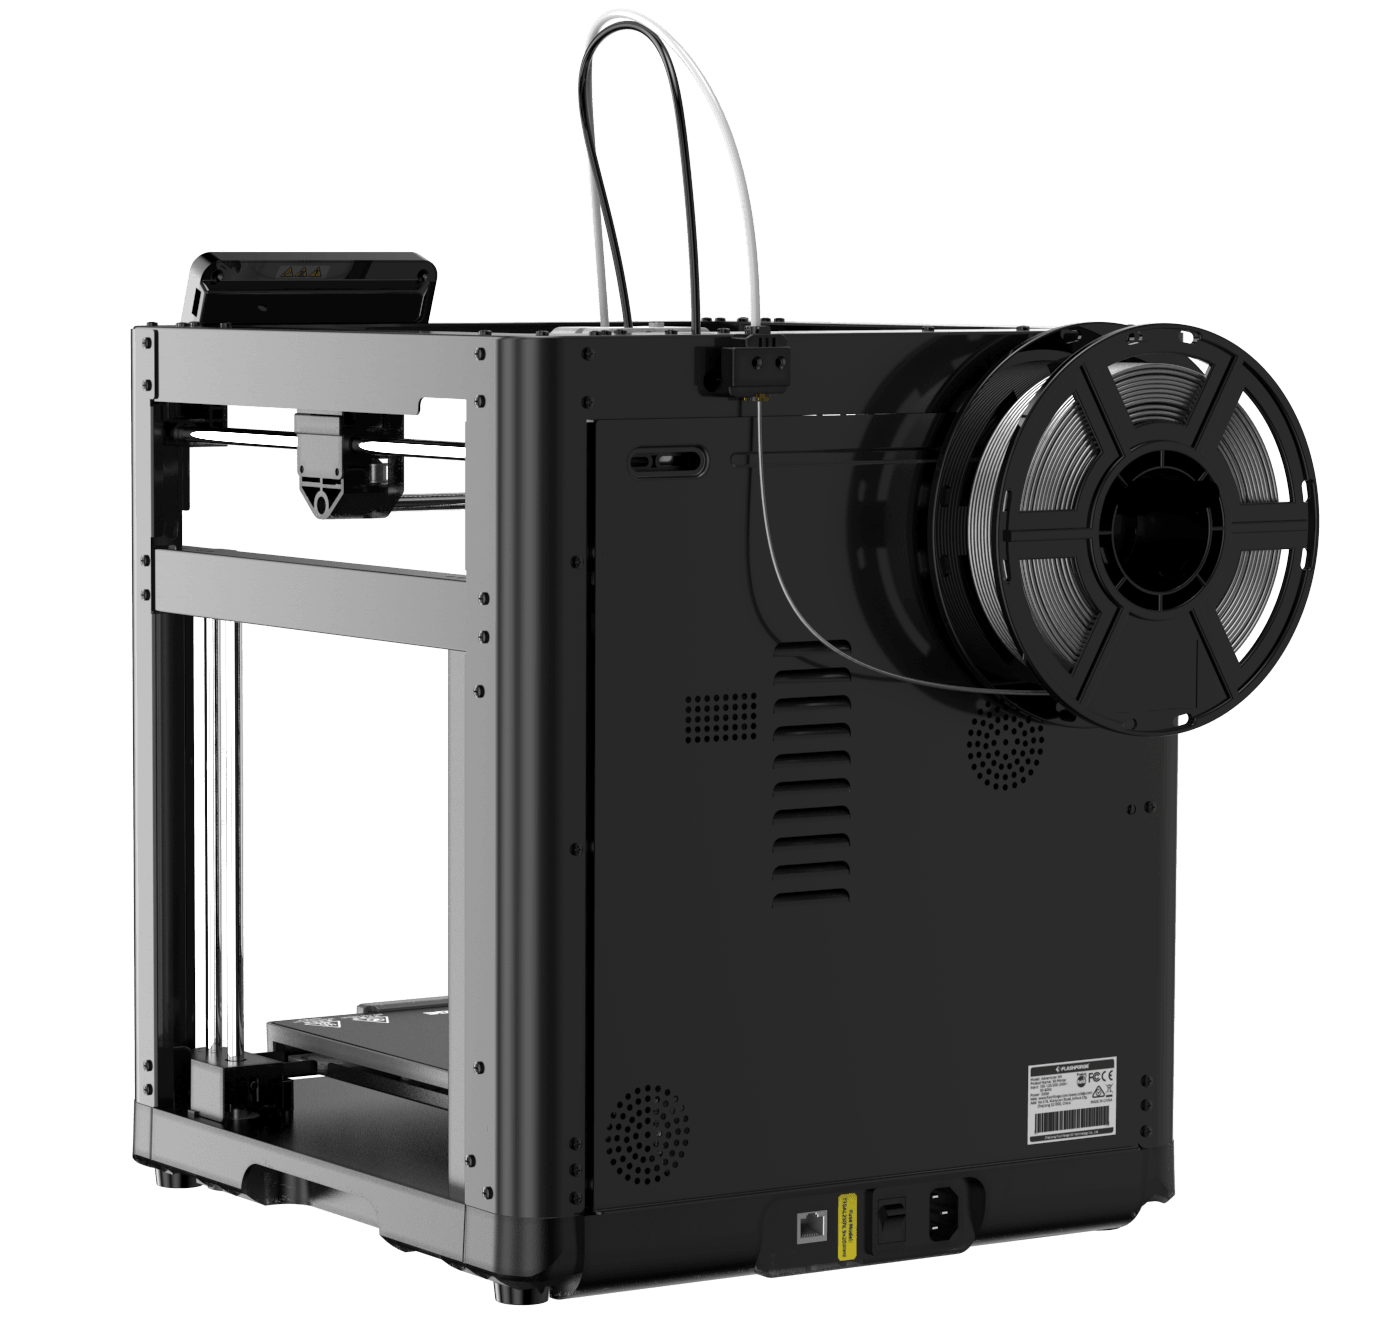 FLASHFORGE ADVENTURER 5M - 3Digital | Droni e Stampanti 3D